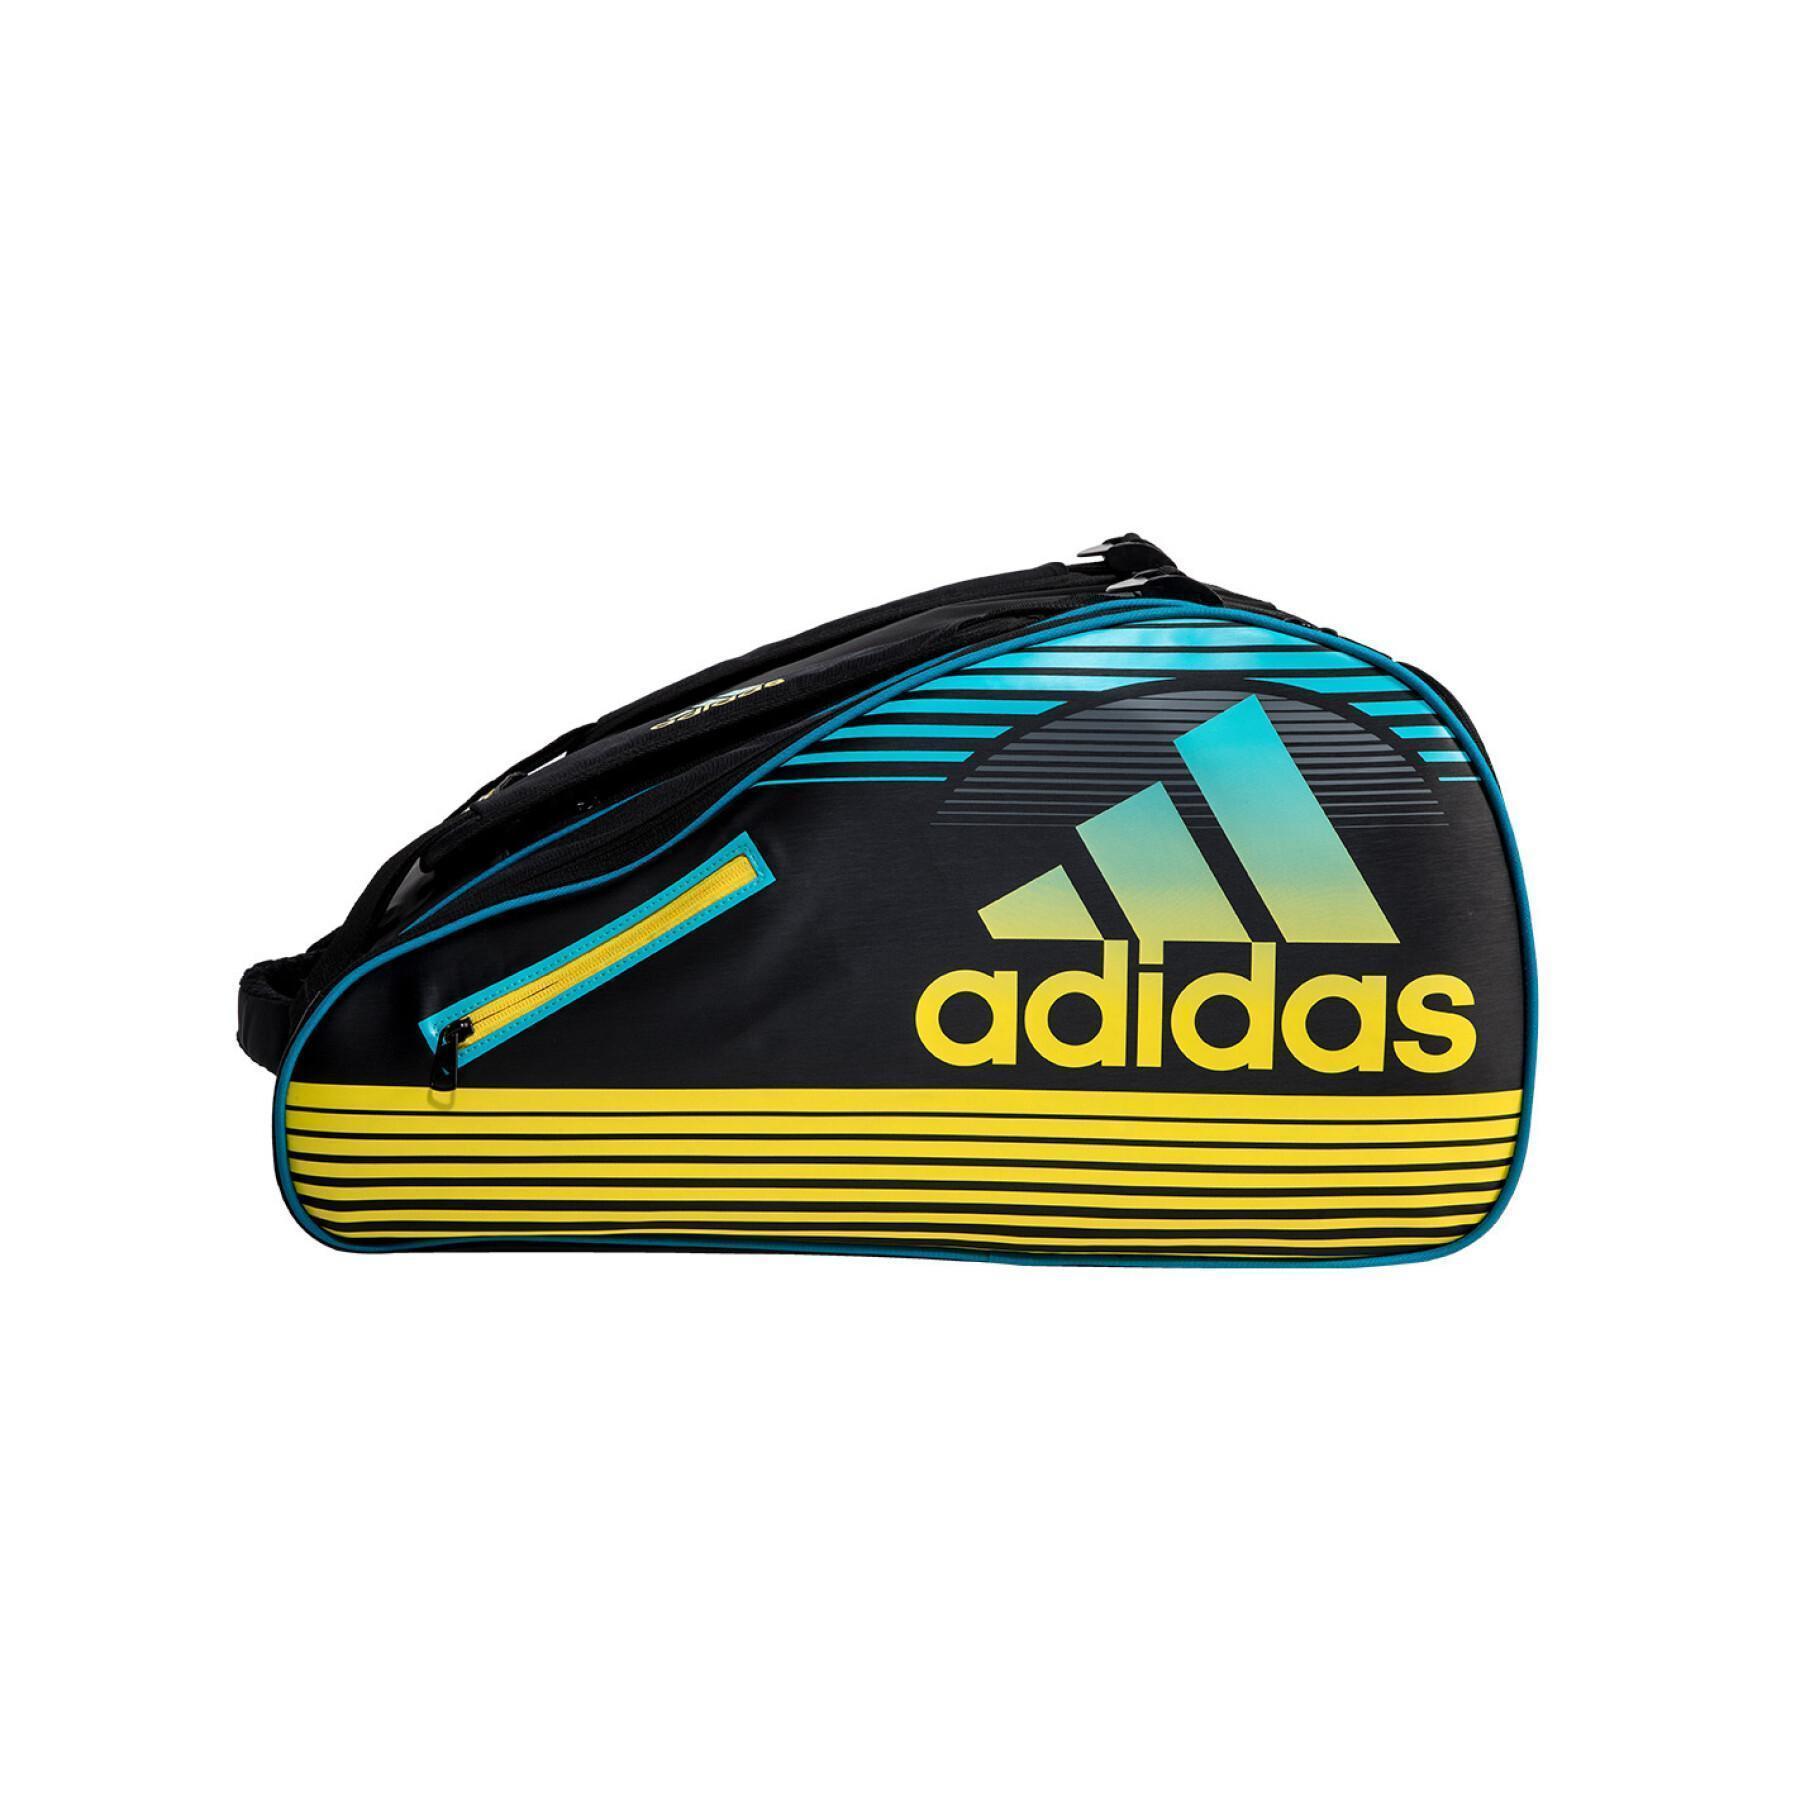 Padel racket väska adidas Tour